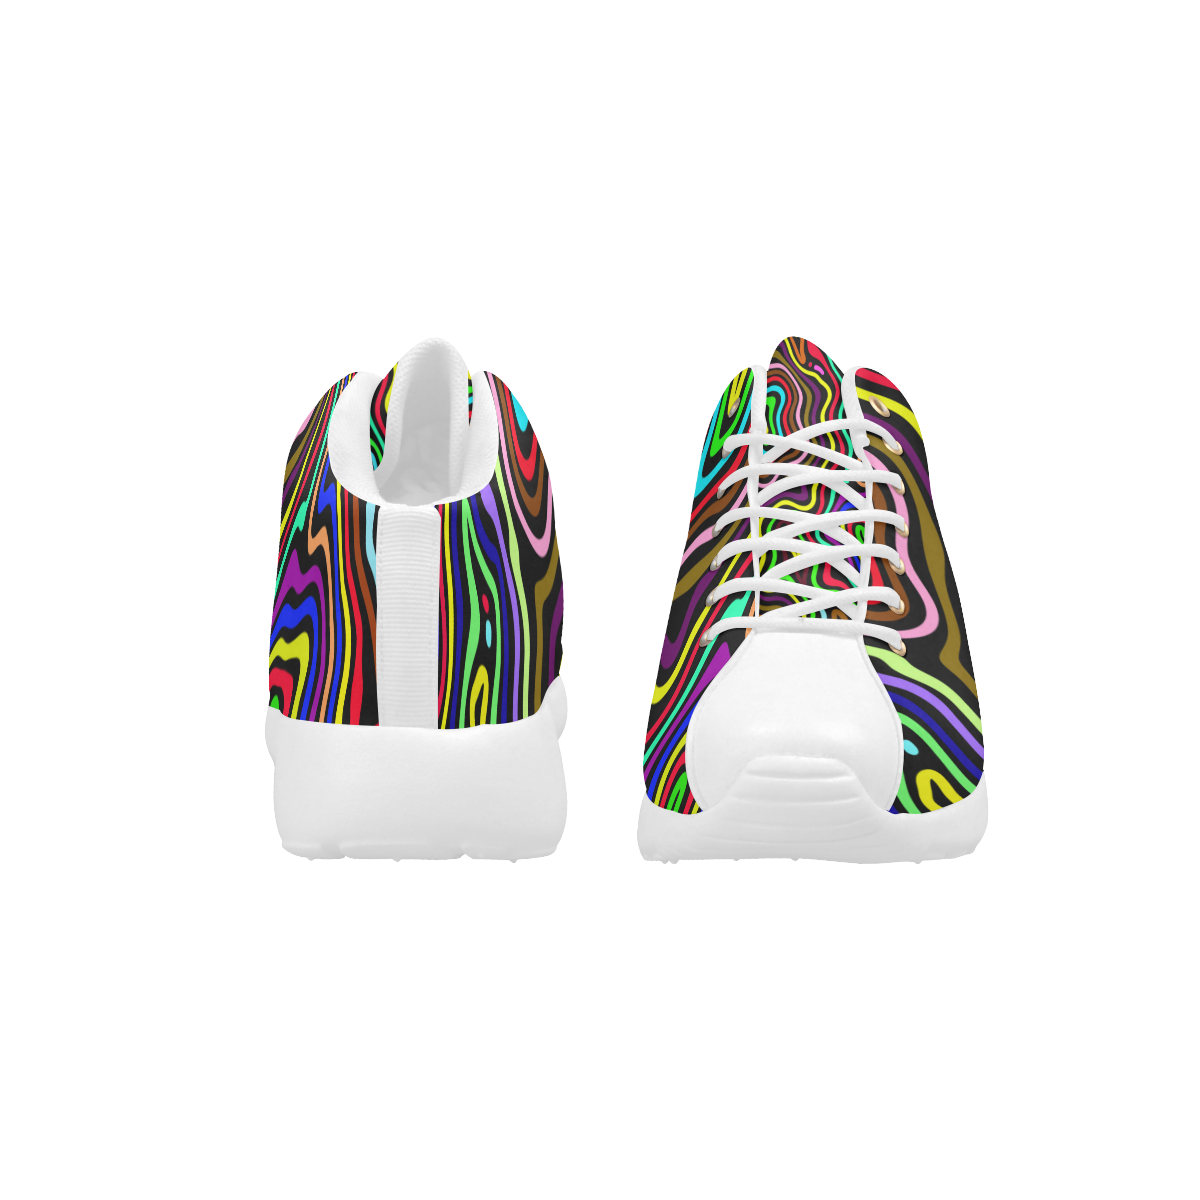 Multicolored Wavy Line Pattern Men's Basketball Training Shoes (Model 47502)